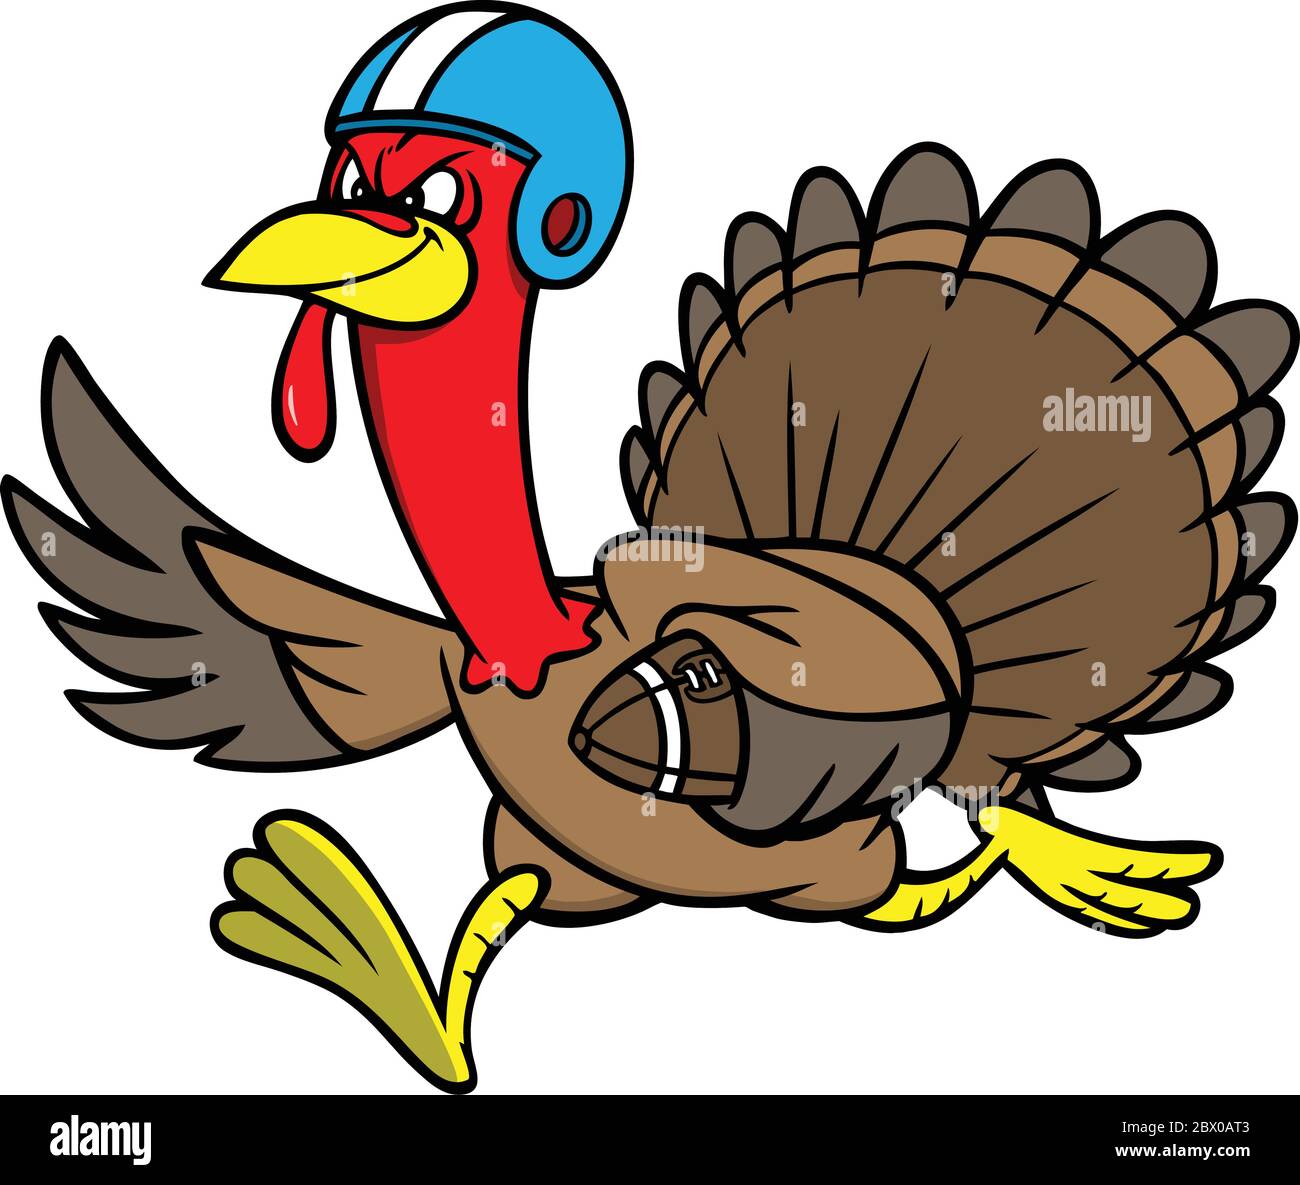 Turkey with Football- A Cartoon Illustration of a Turkey with a Football  Stock Vector Image & Art - Alamy